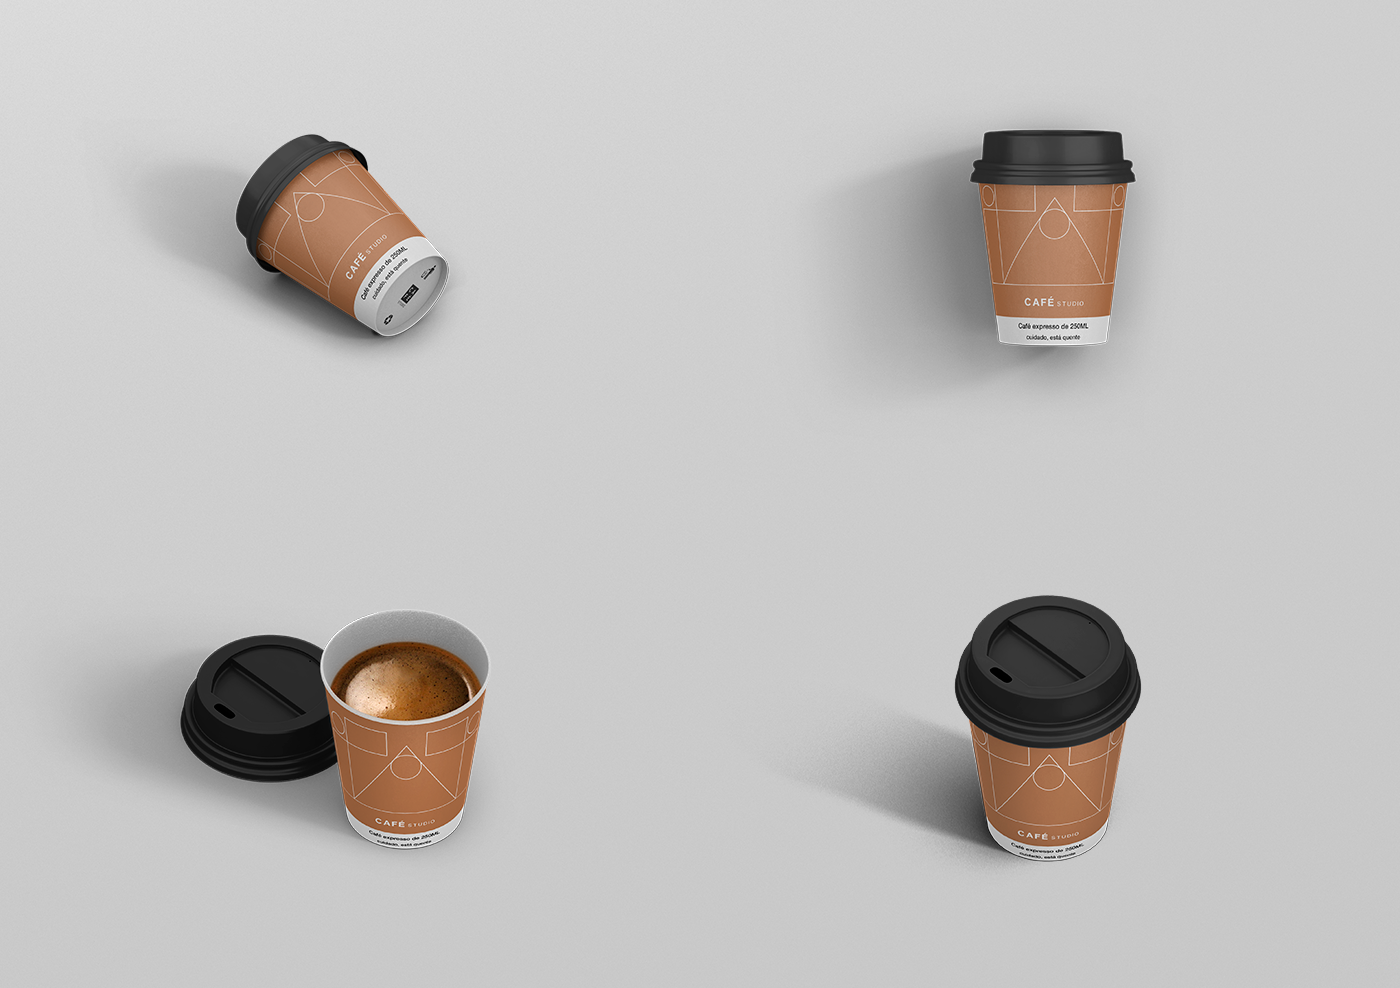 Brand Design pack design packing coffe Minimalism visual identity cafe studio cafe